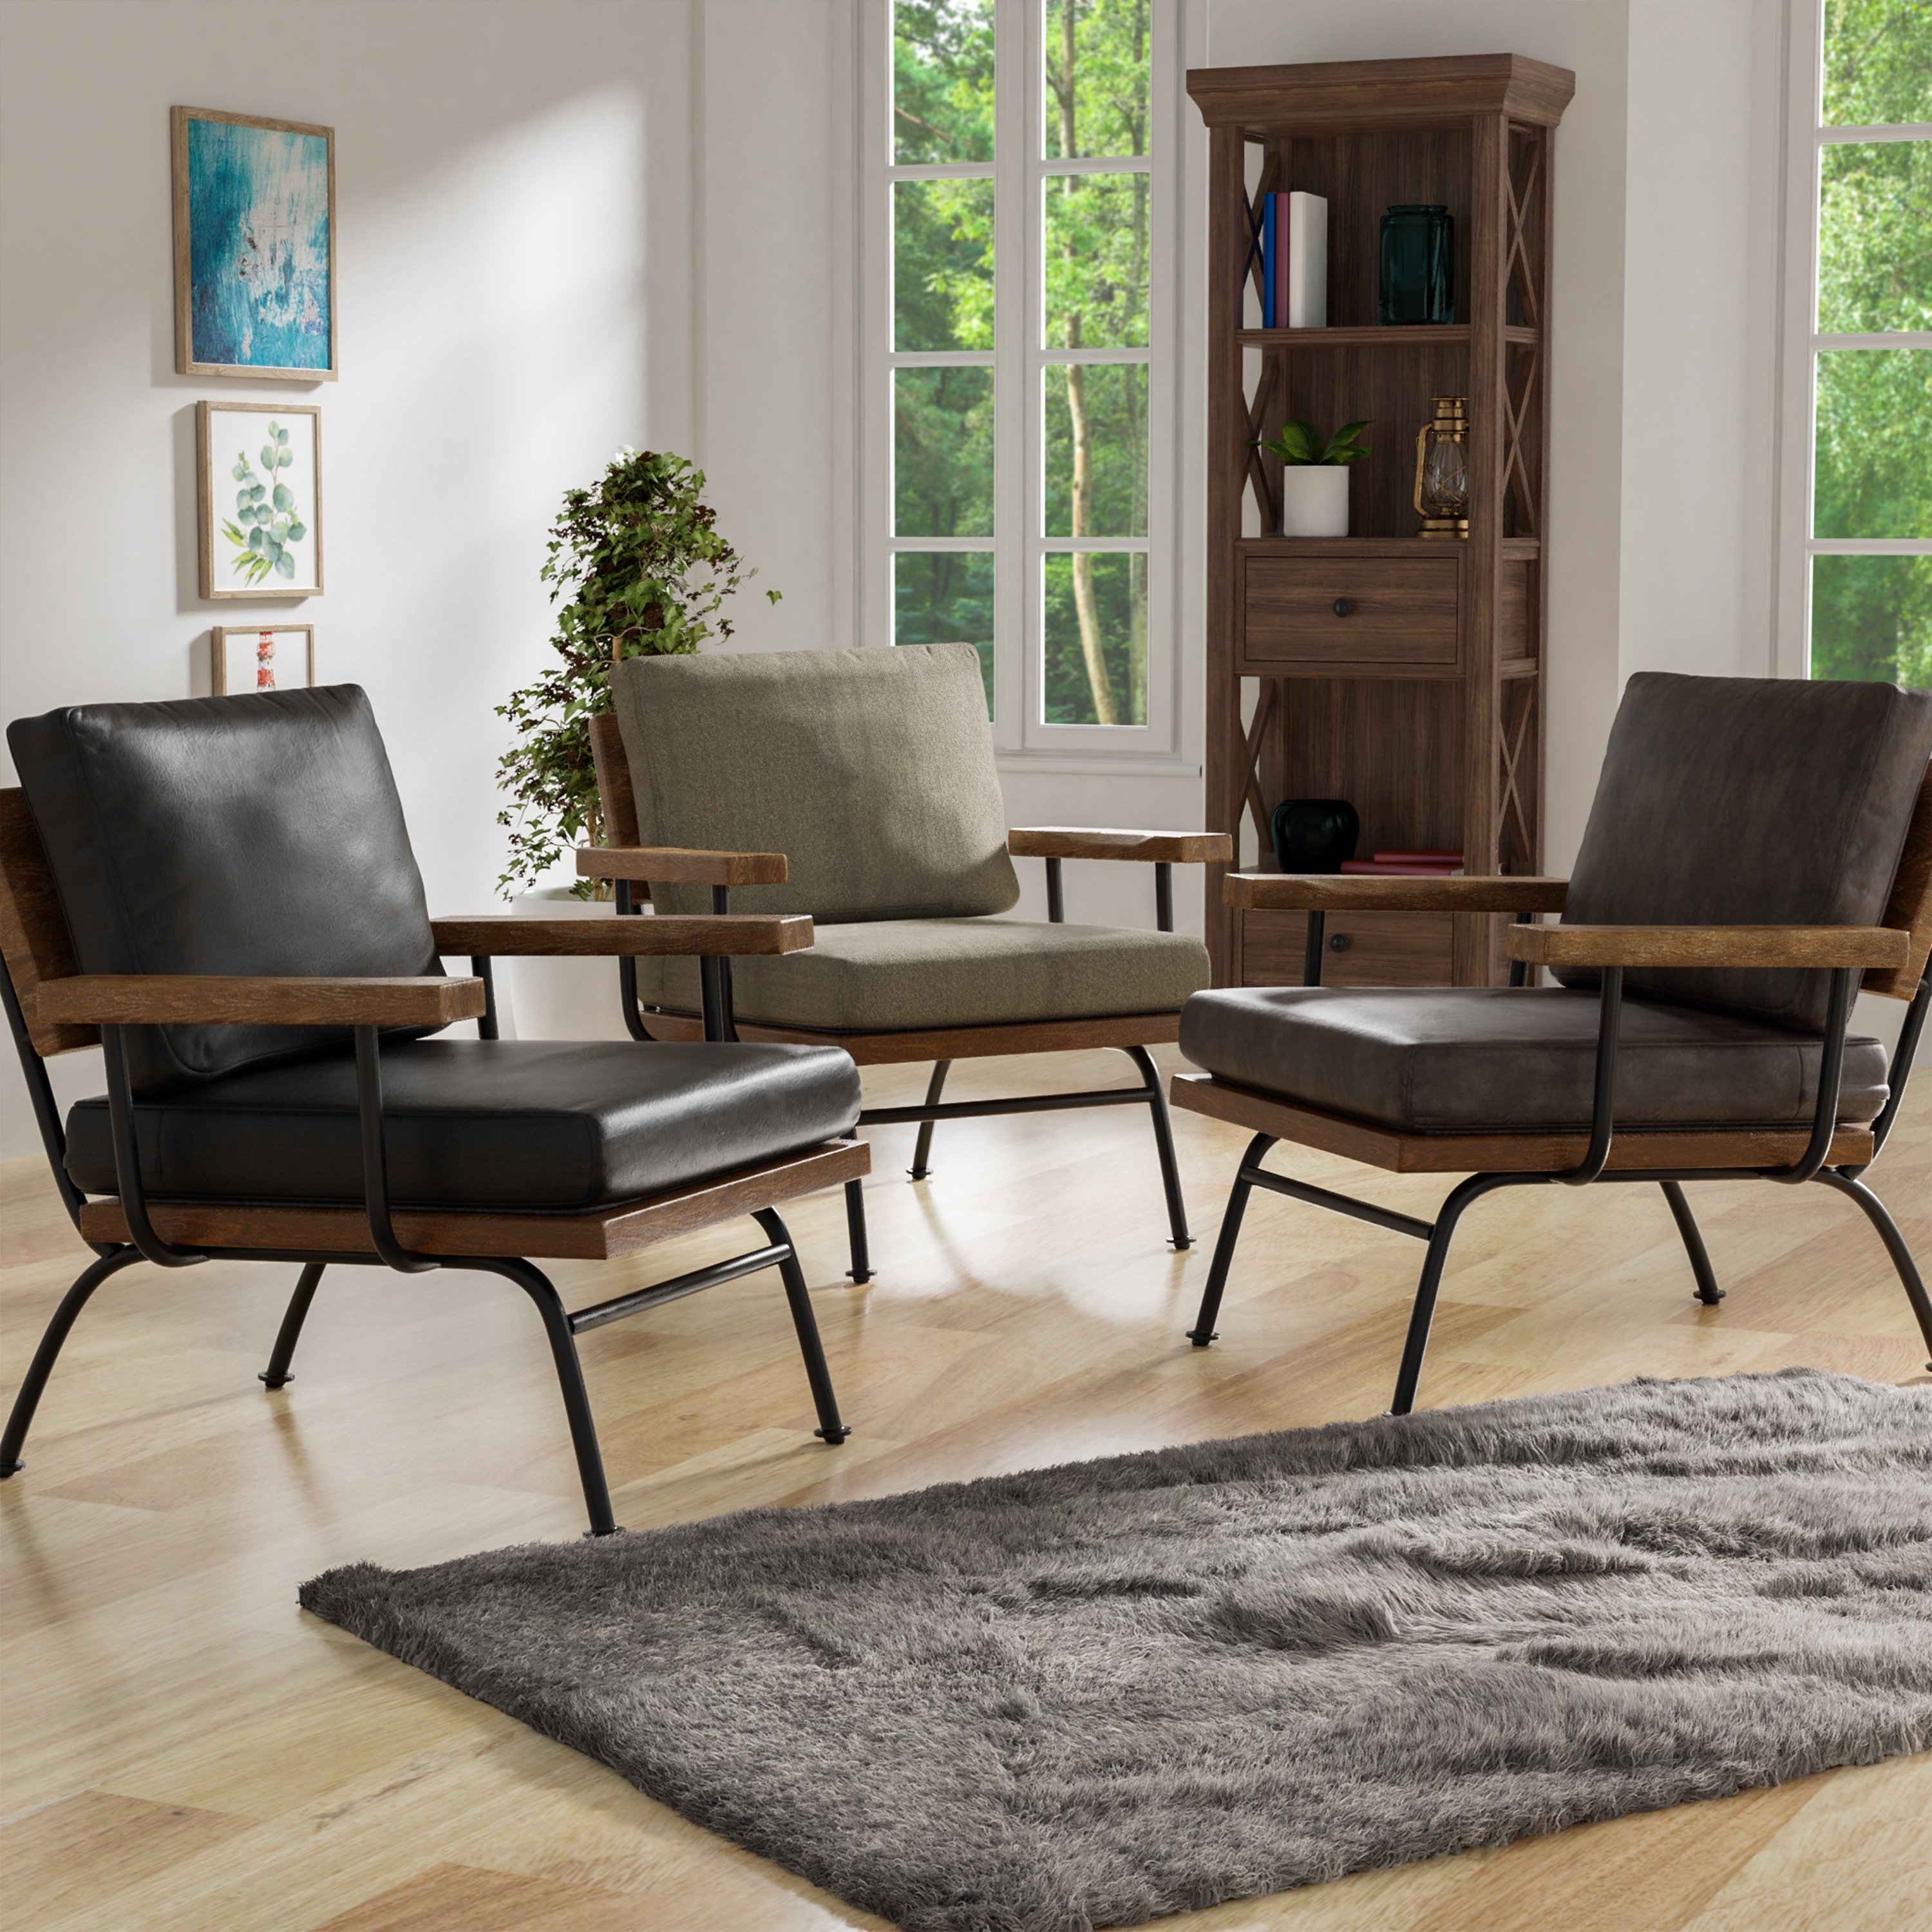 Furniture of America Bice Industrial Accent Chair eBay